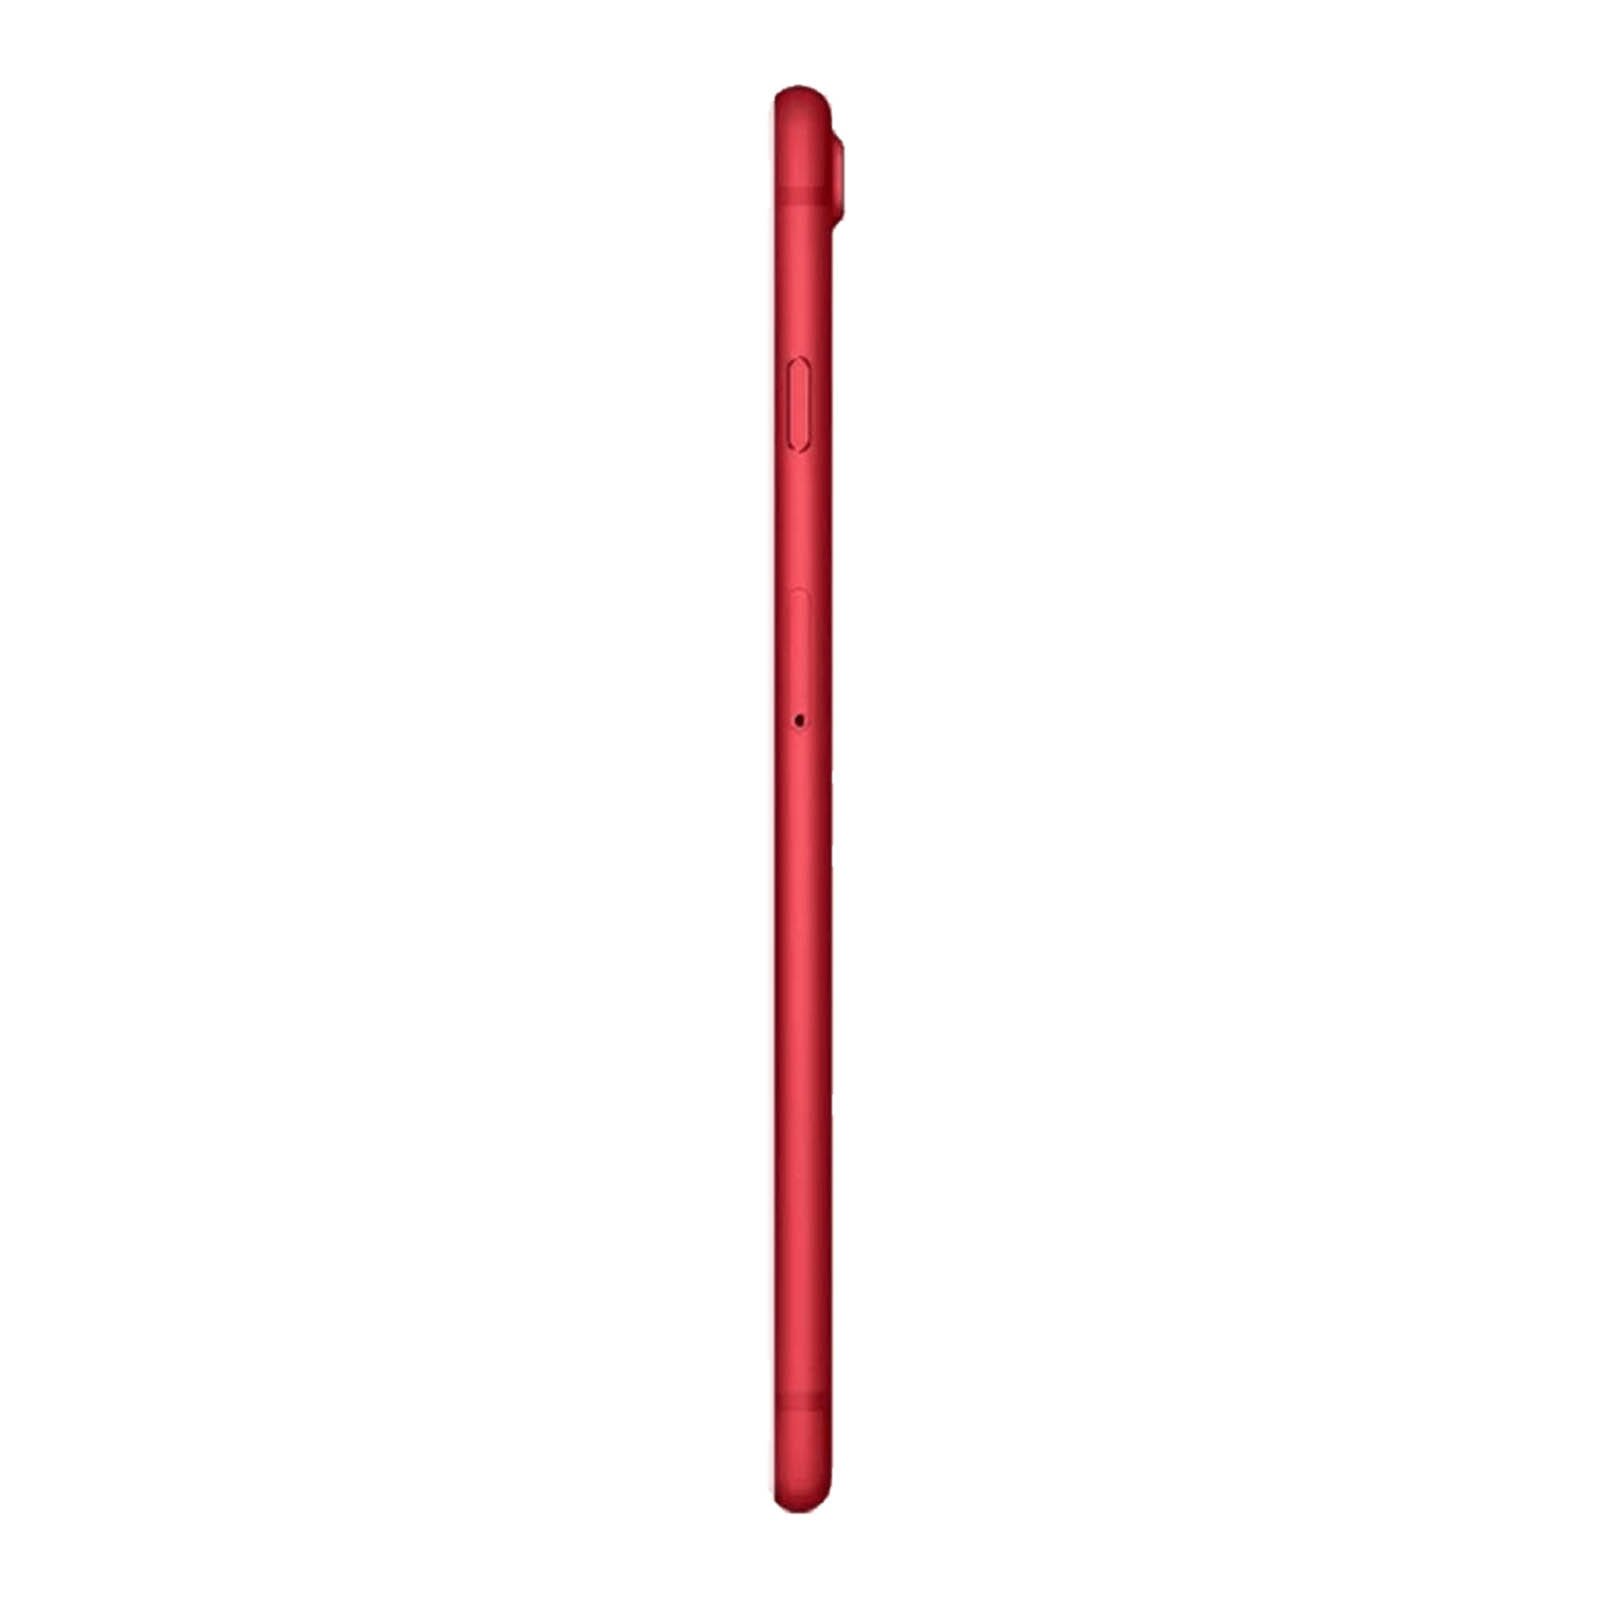 Apple iPhone 7 Plus 128GB Product Red Pristine - Unlocked